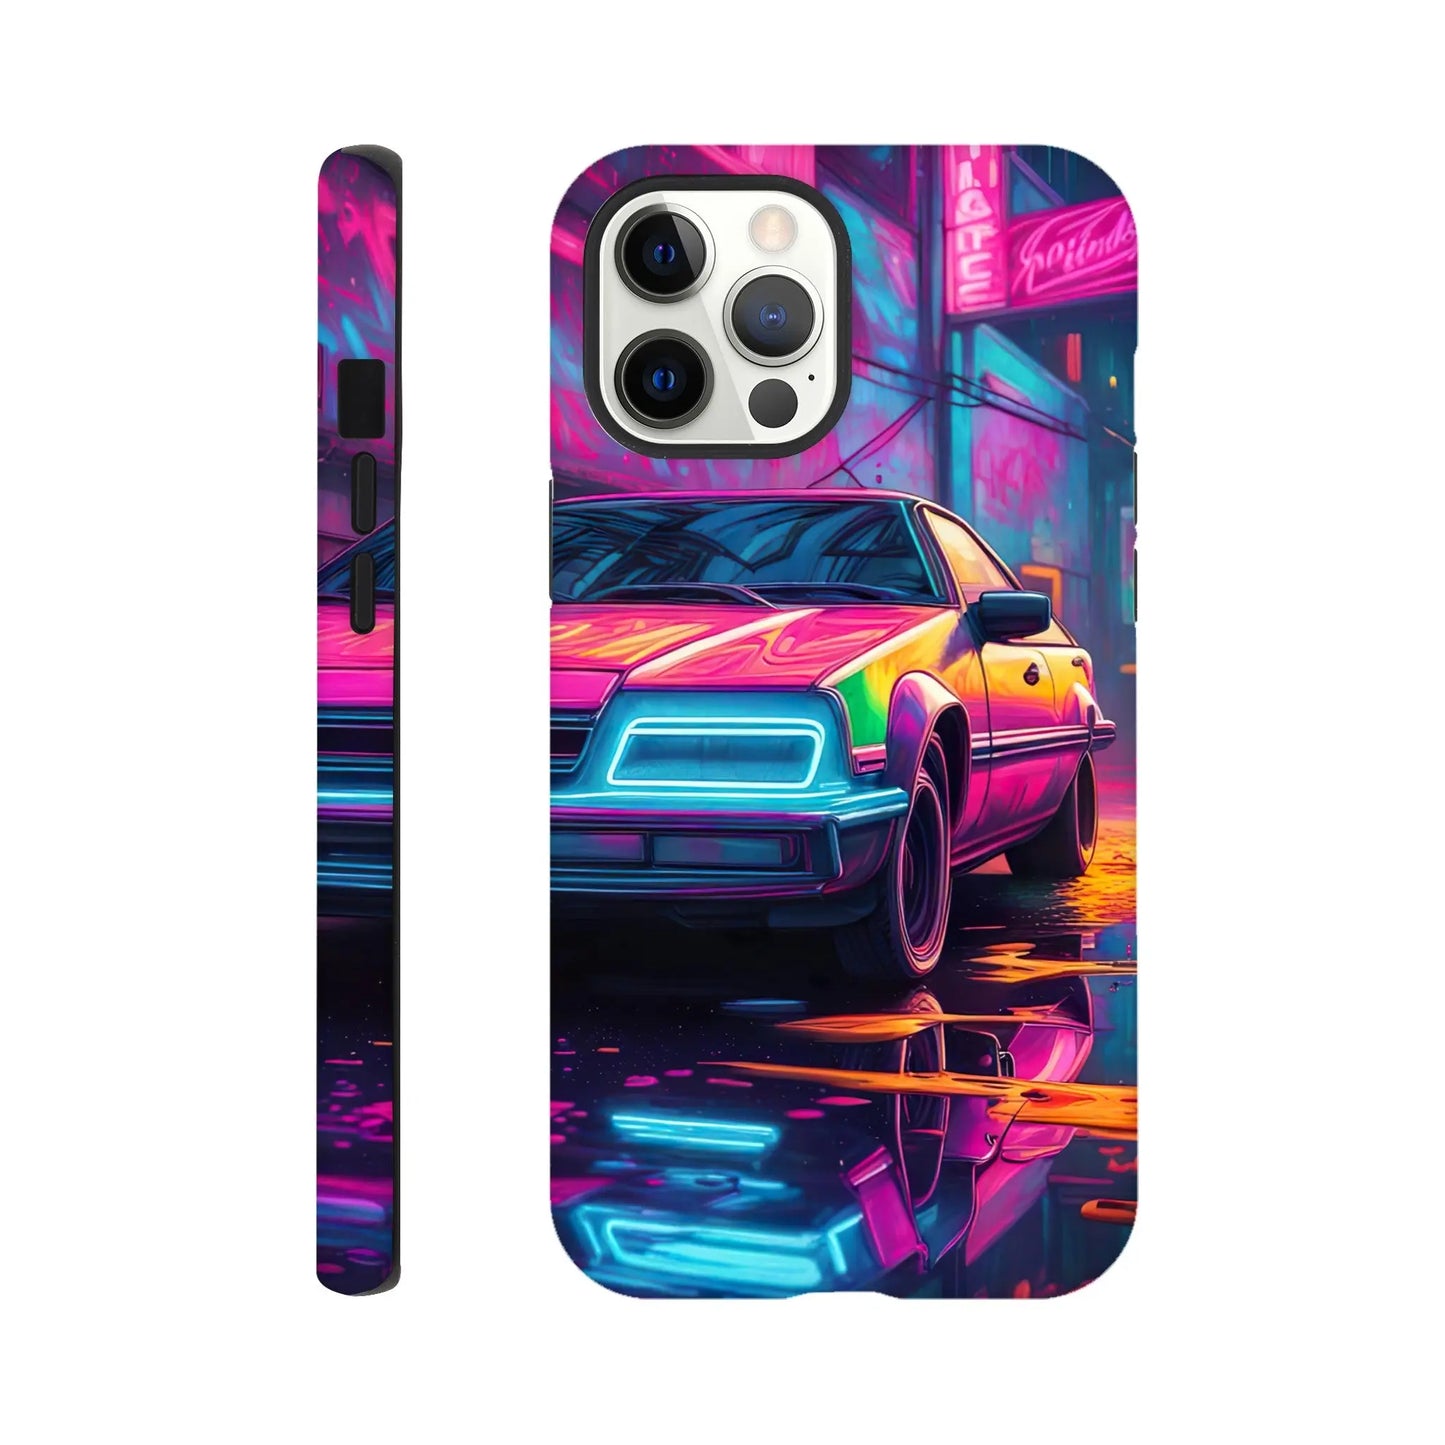 Smartphone-Hülle "Hart" - Retro Auto - Neon Stil, KI-Kunst RolConArt, Neon, iPhone-12-Pro-Max